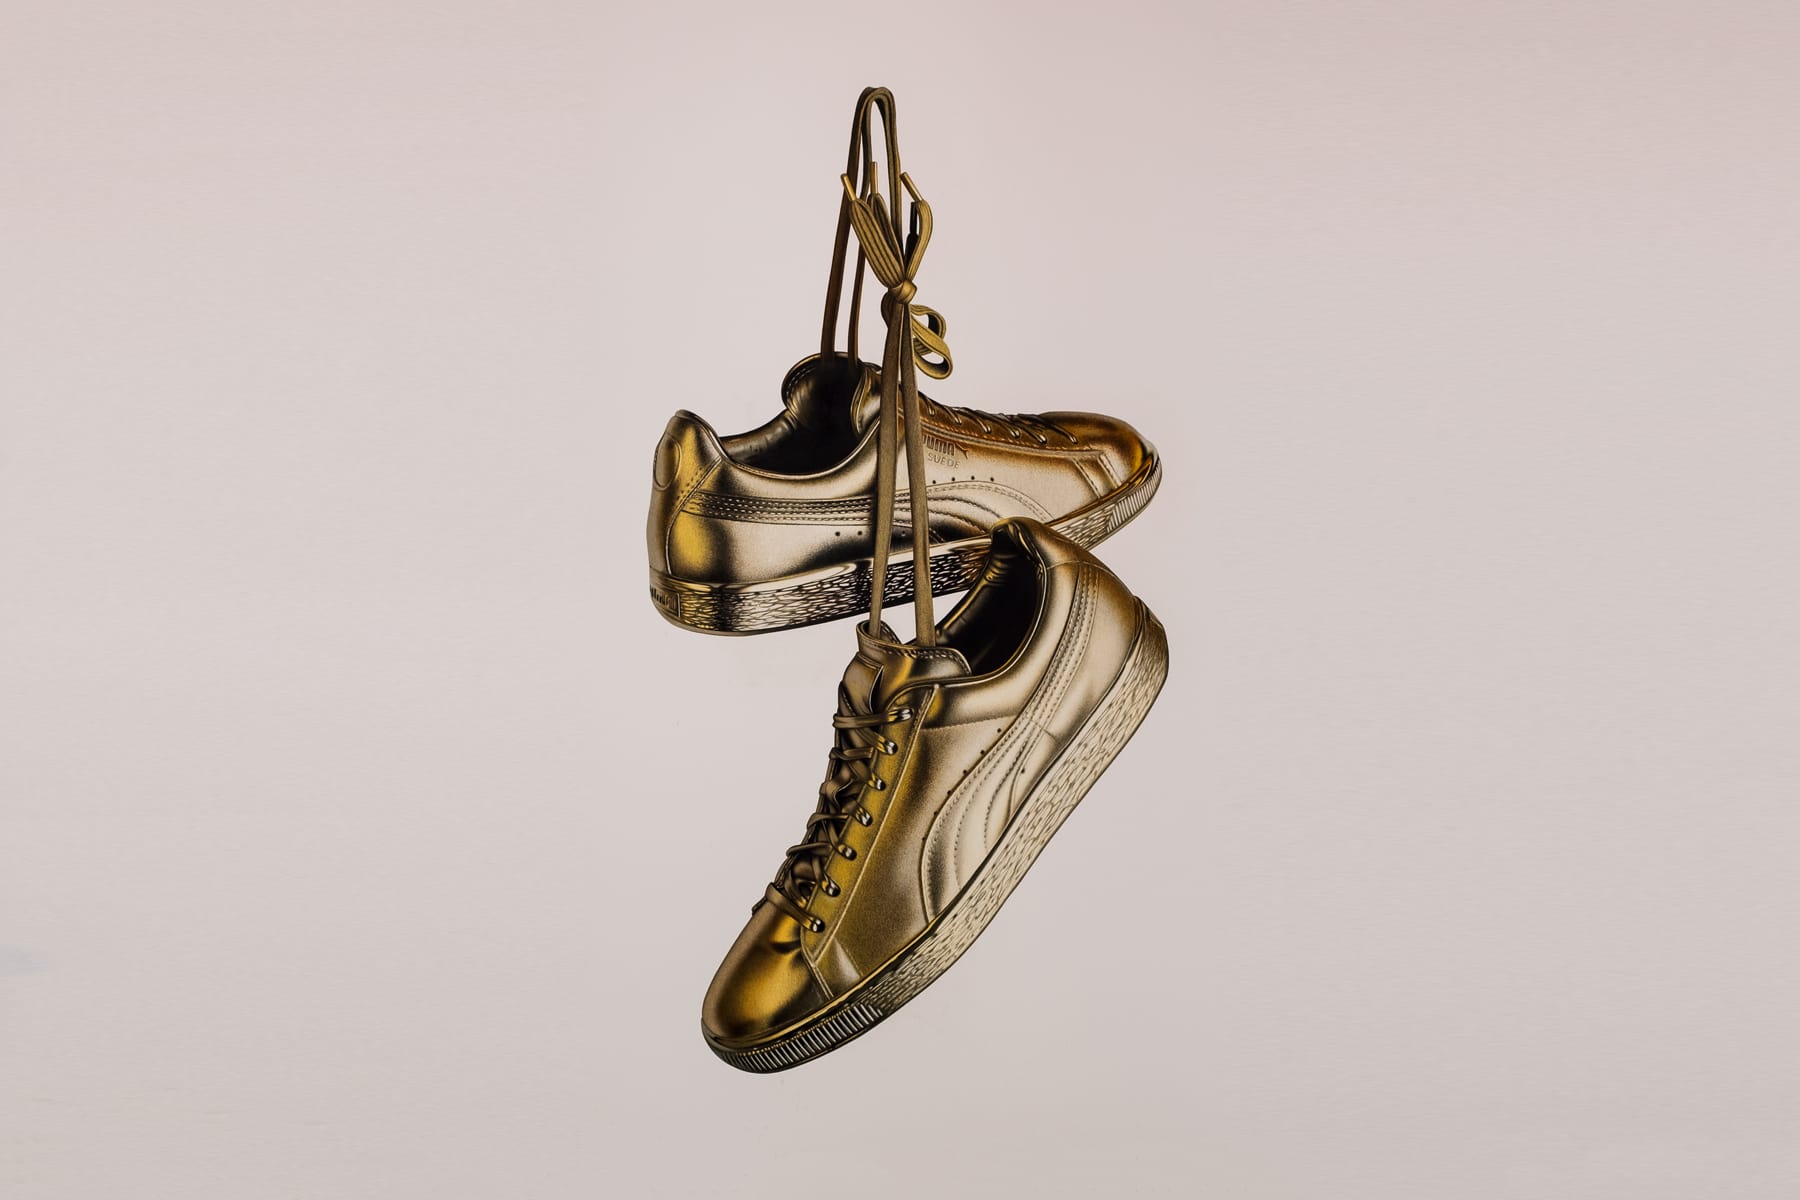 puma golden shoes